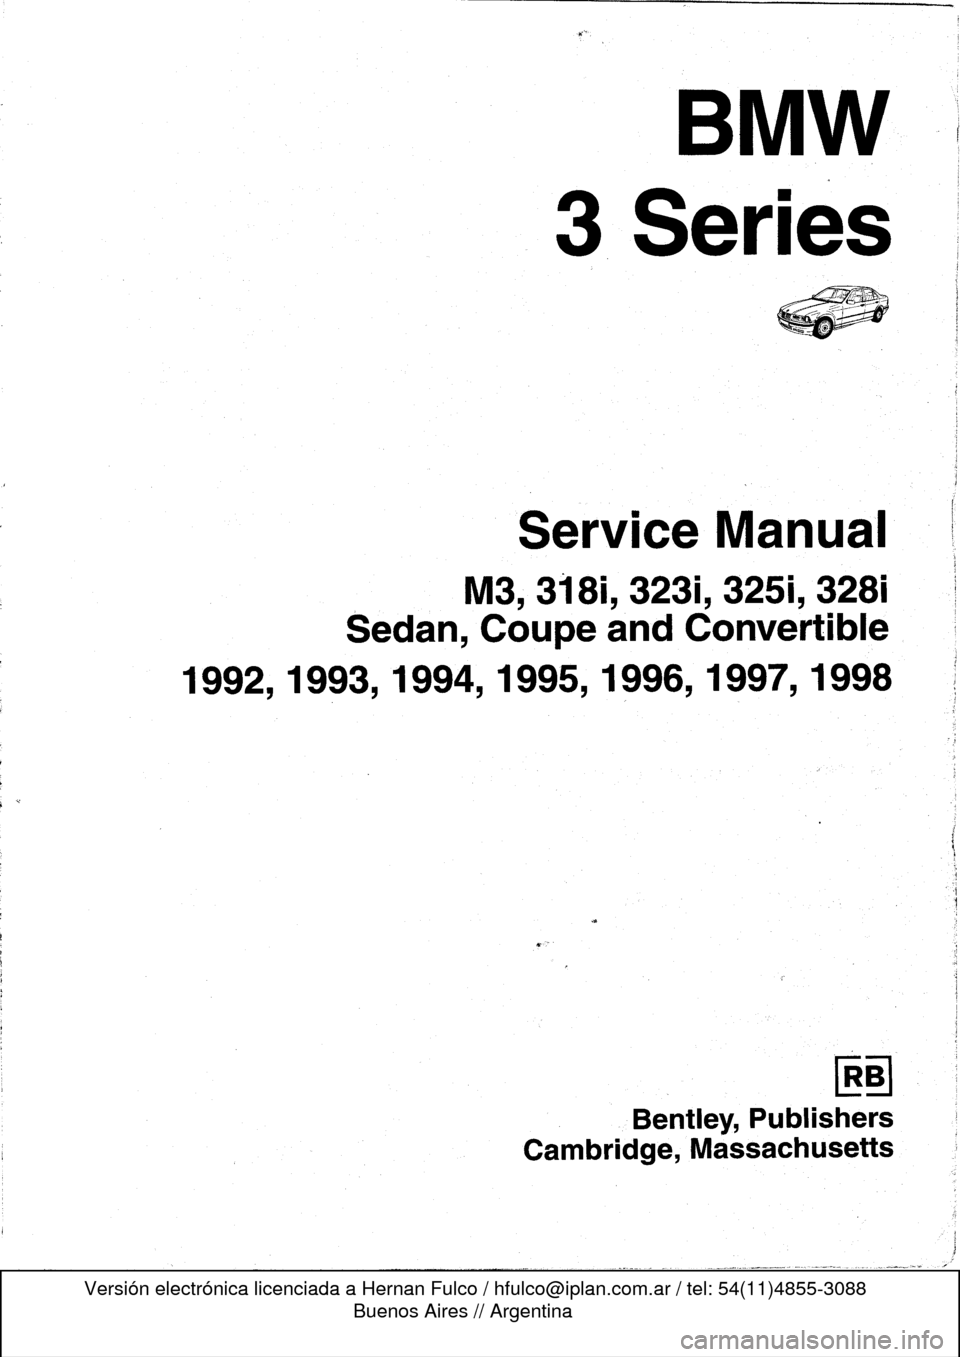 BMW 325i 1998 E36 Workshop Manual 
B
mw

3
Series

M3,
3181,3231,3251,
3281

Sedan,
Coupe
and
Convertible

1992,1993,1994,1995,
1996,1997,
1998

Bentley,
Publishers

Cambridge,
Massachusetts 